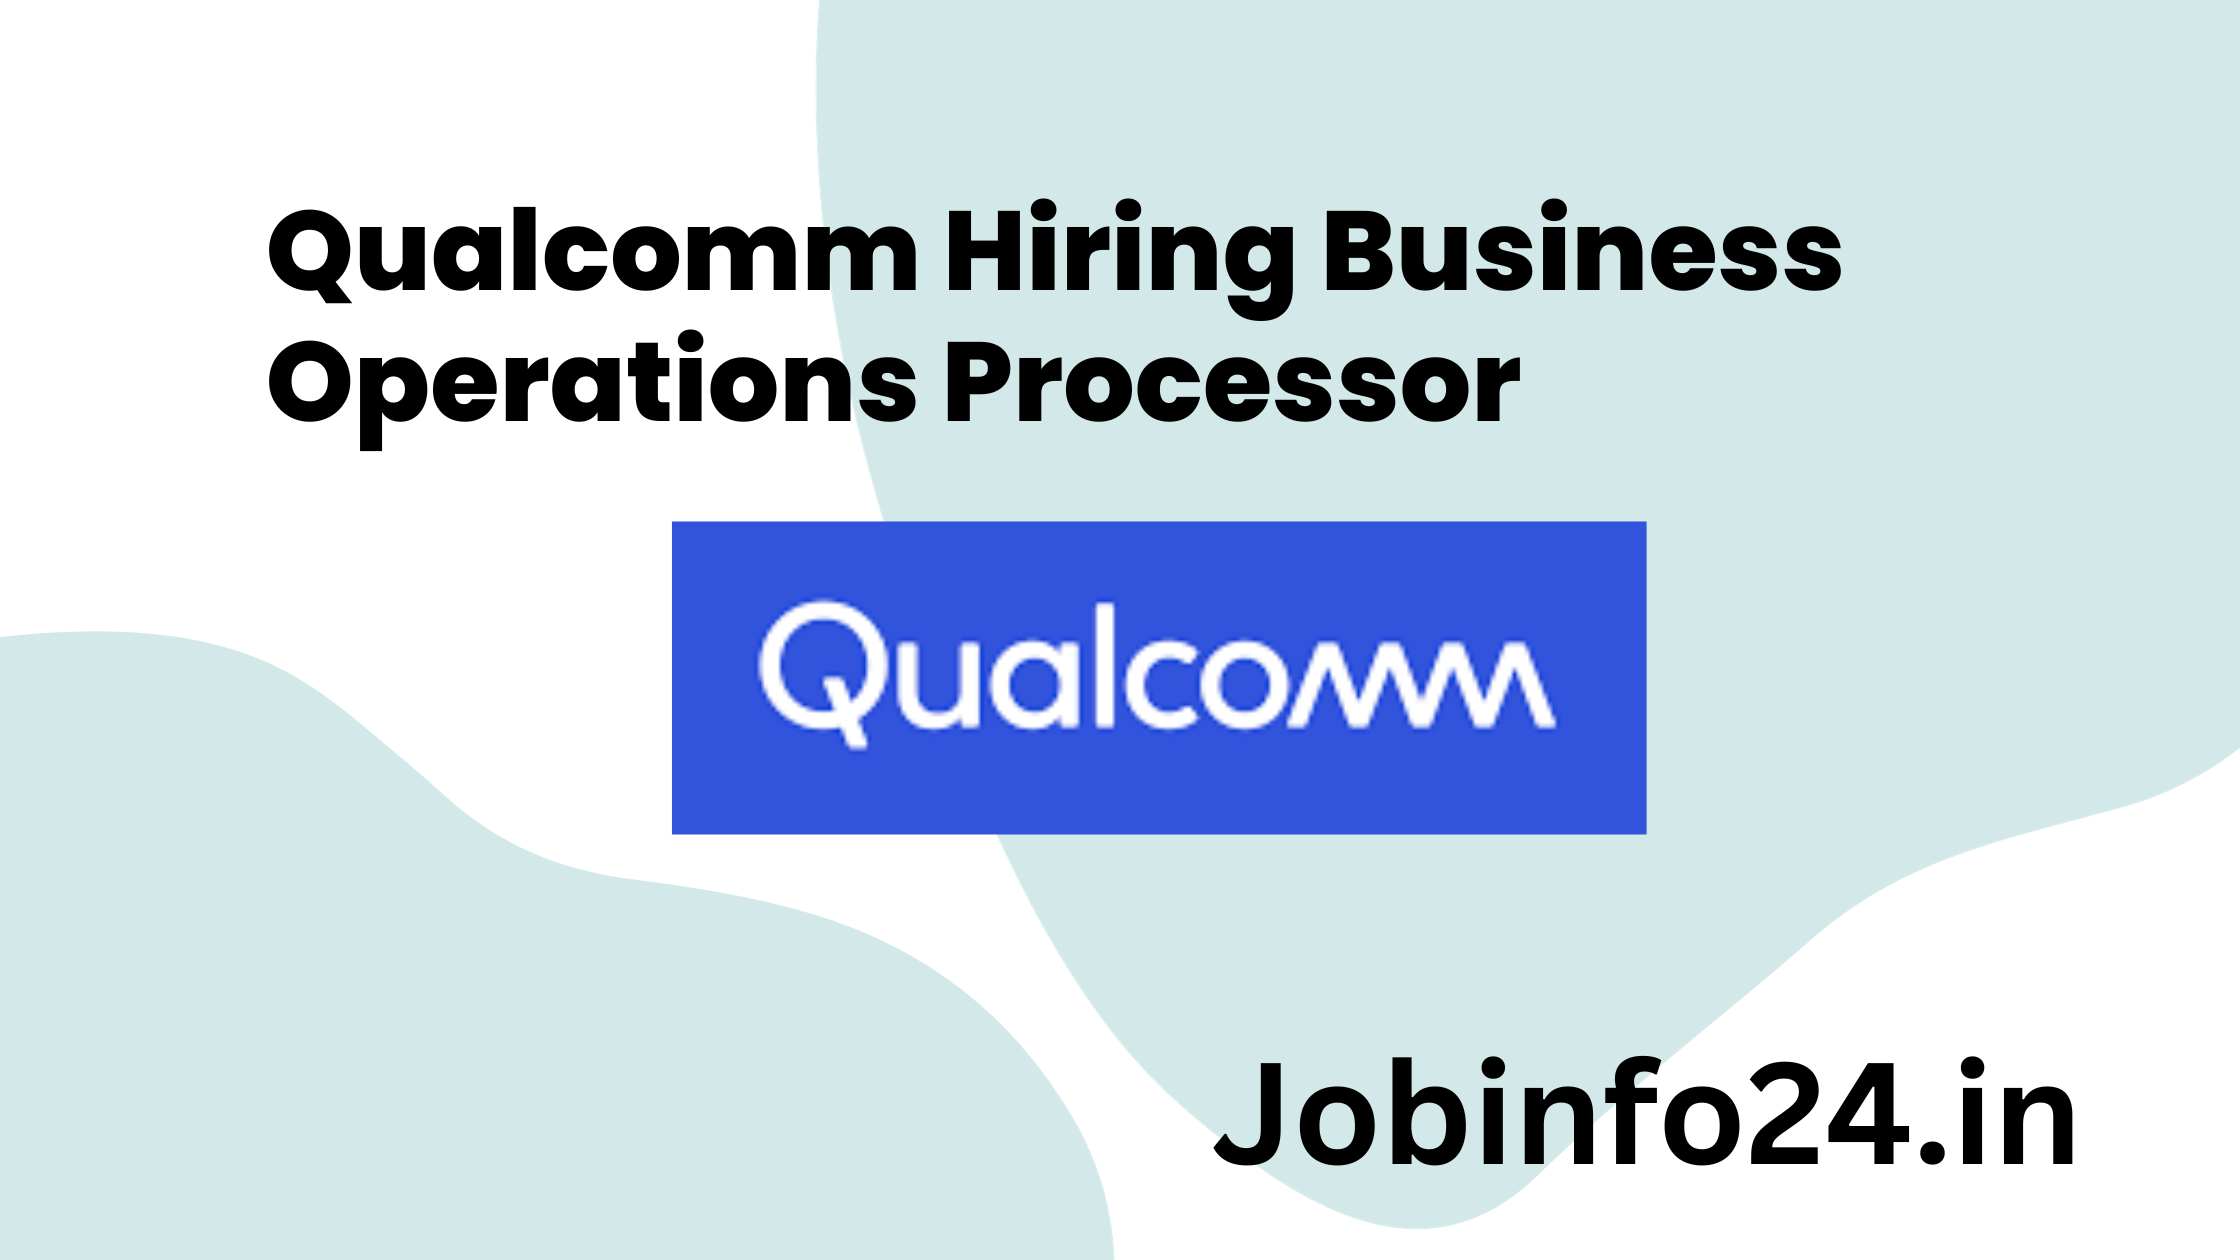 Qualcomm Hiring Business Operations Processor